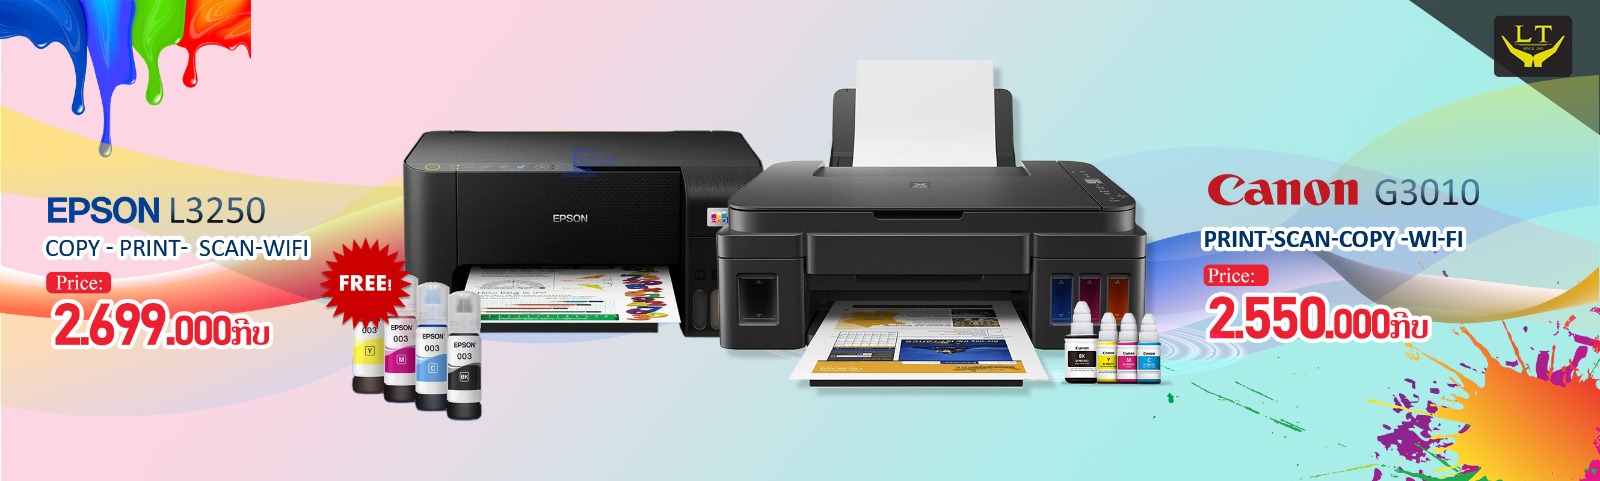 Printer Epson L3250 